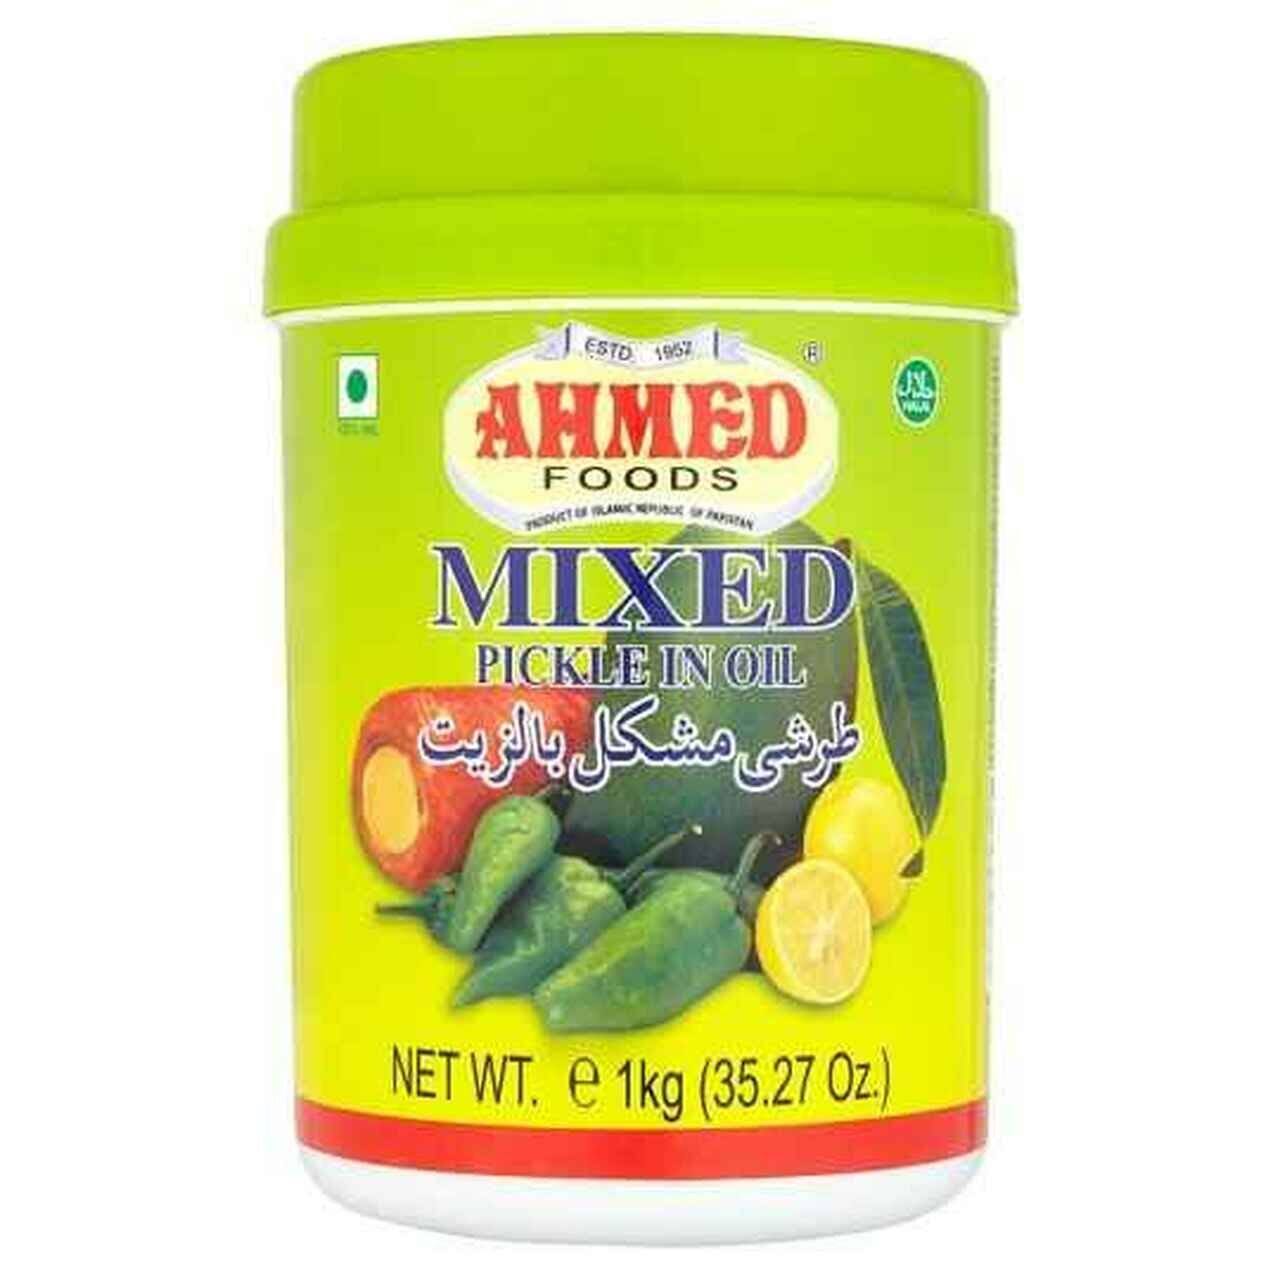 Ahmed Foods Premium Mixed Pickle in Oil, 1kg Mango